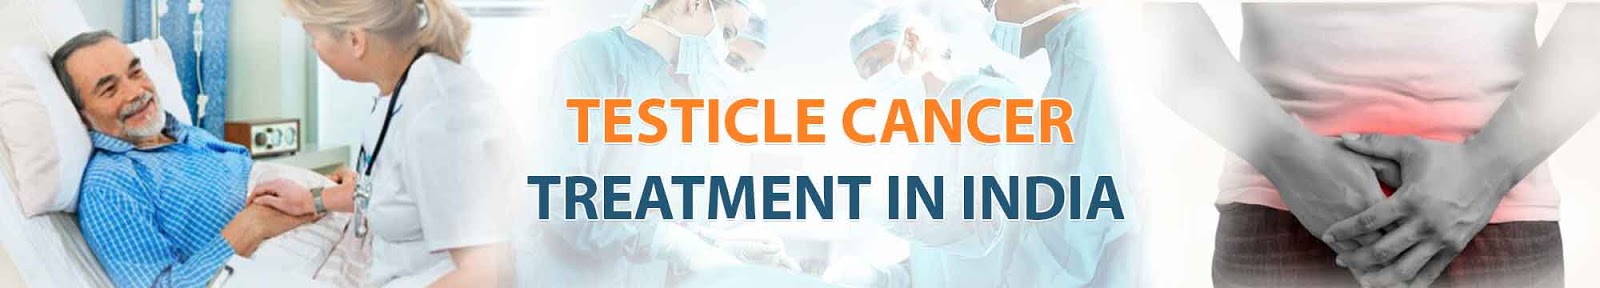 Testicular Cancer Treatment India